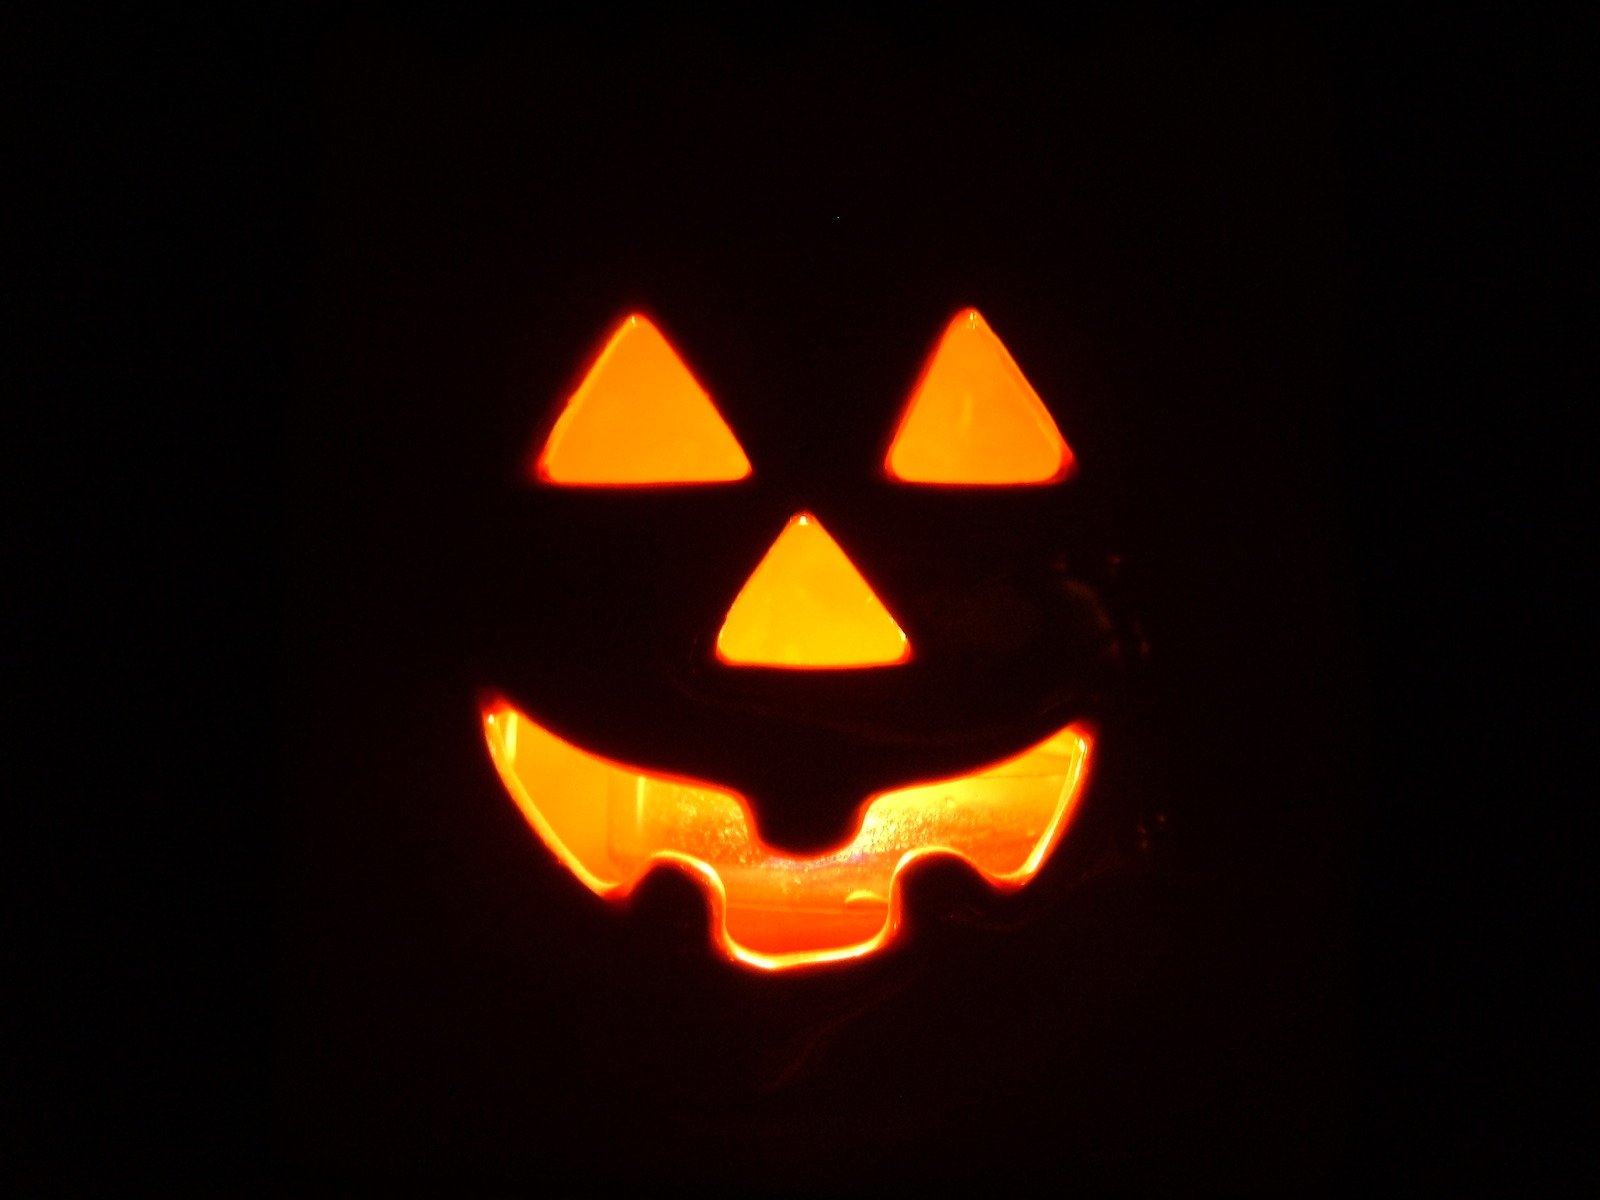 an illuminated pumpkin with a grinning jack - o - lantern face